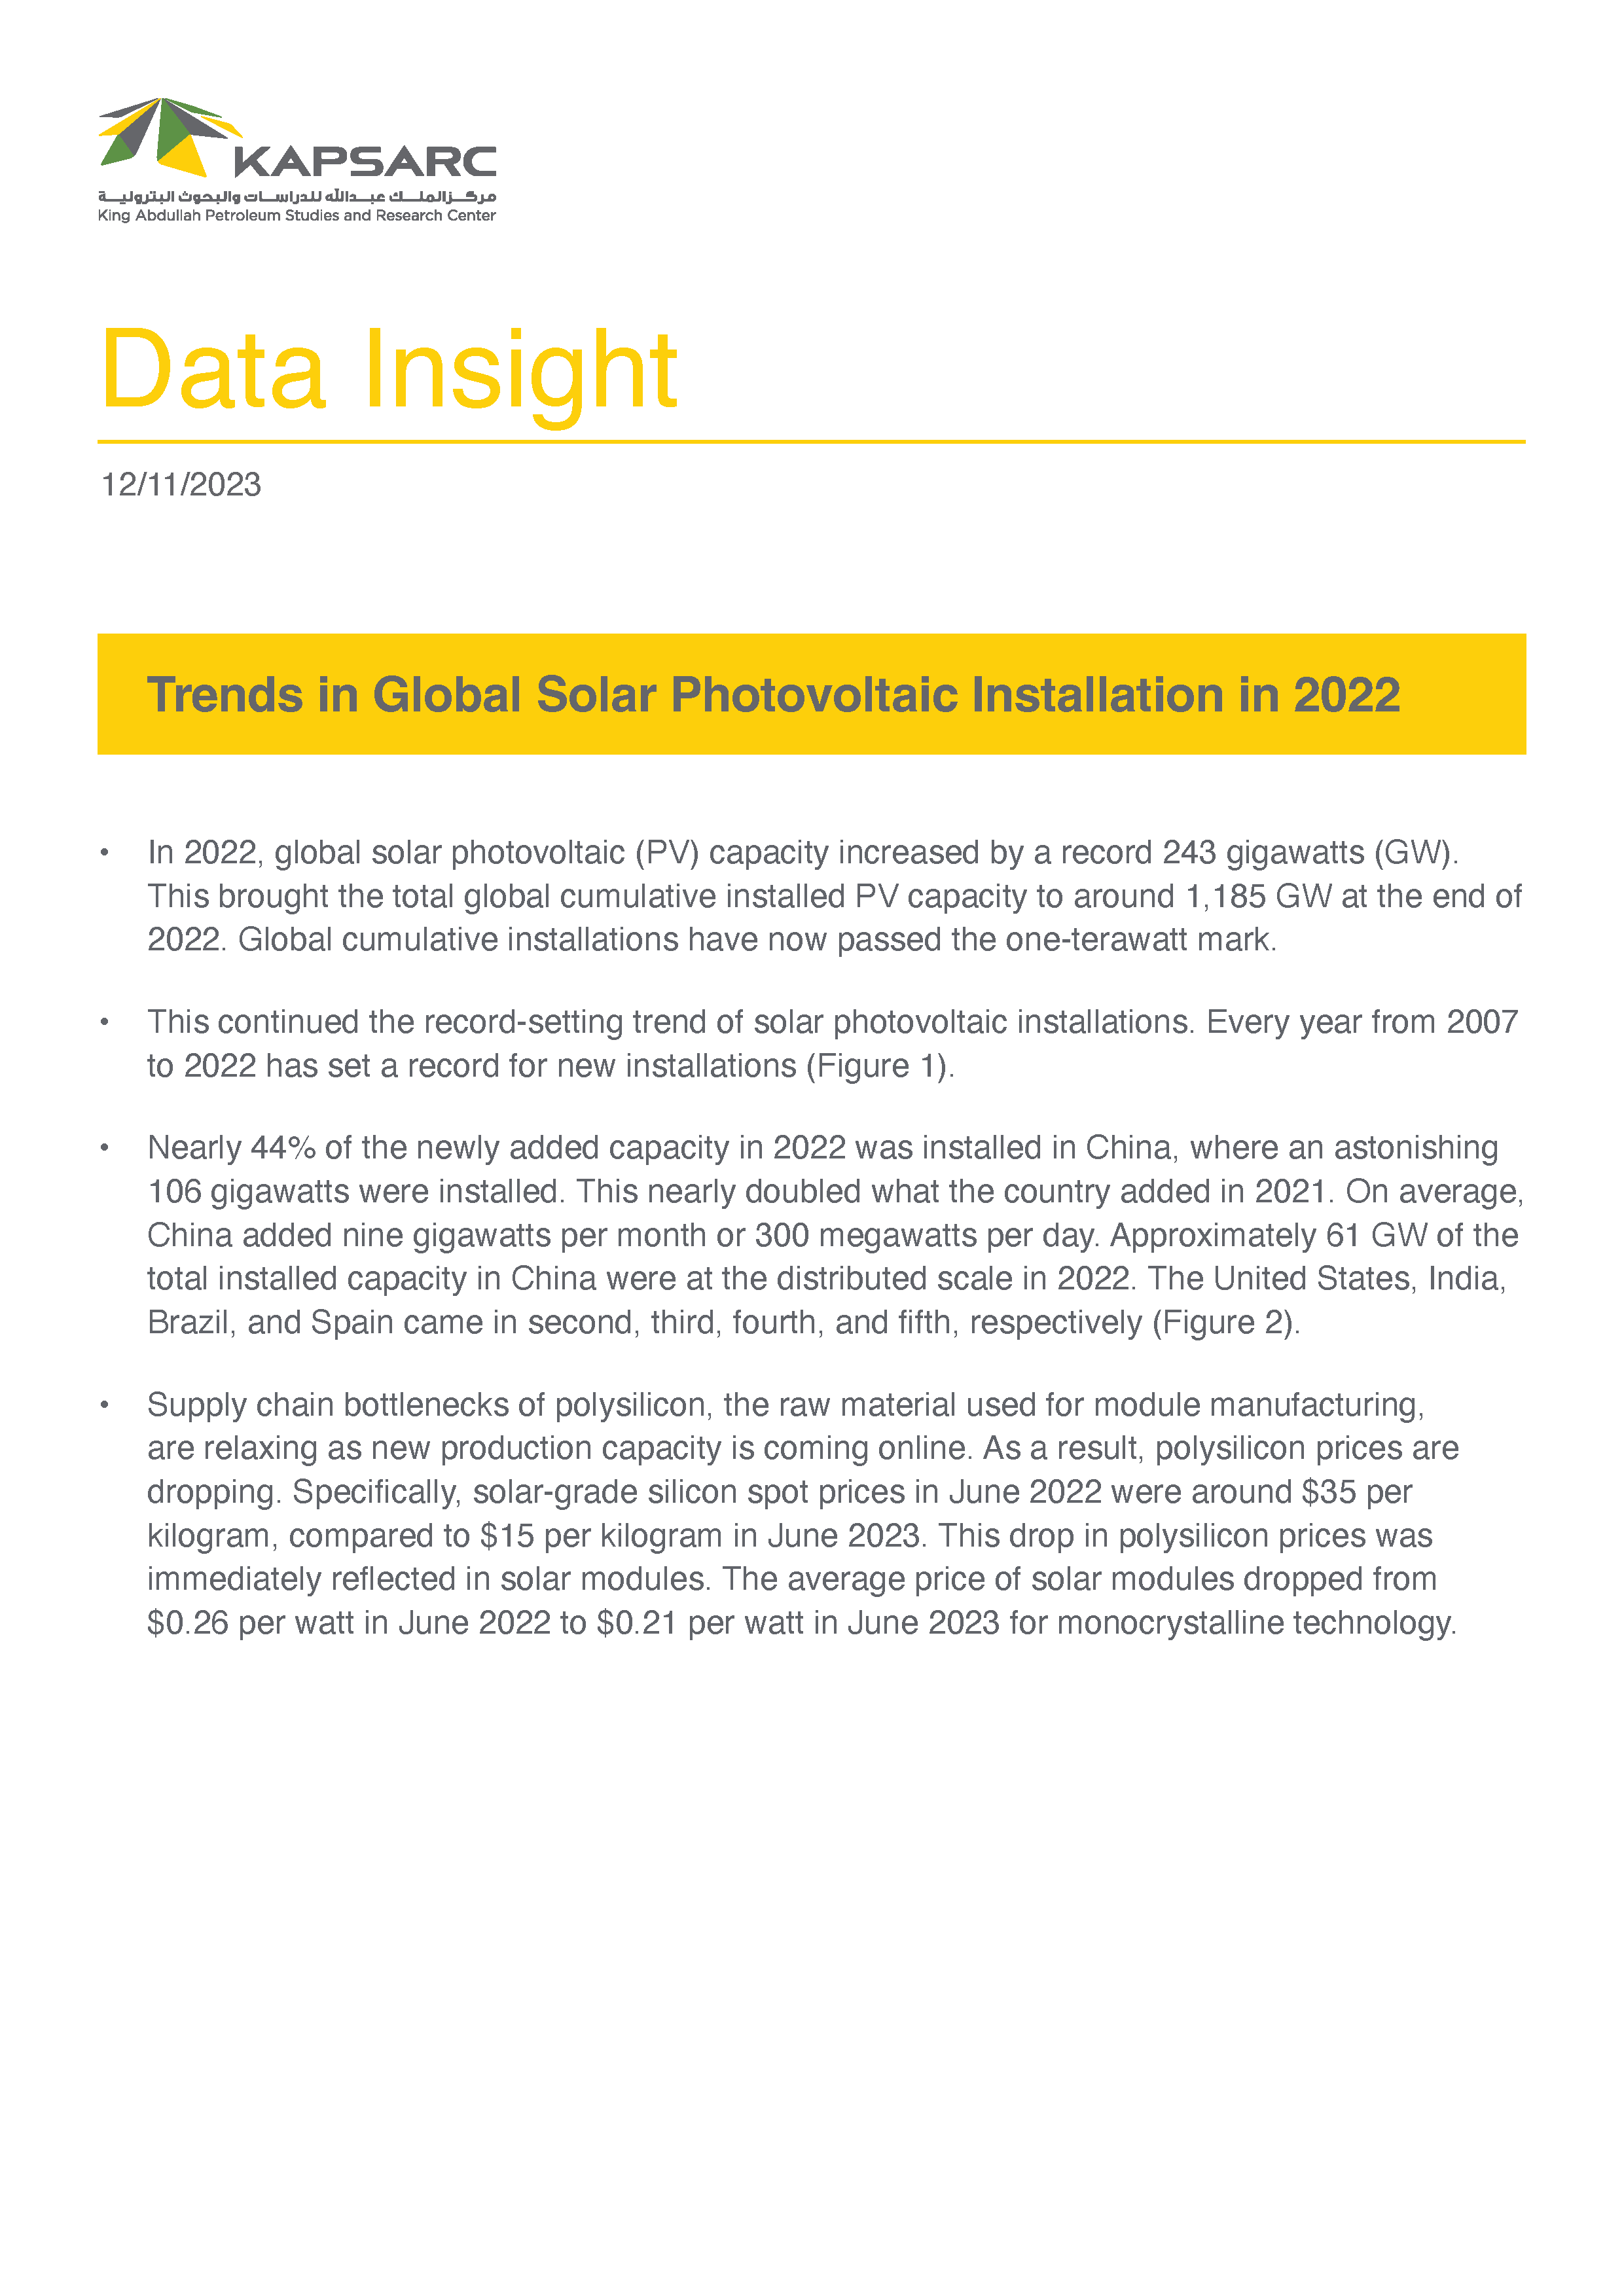 Trends in Global Solar PV Installation in 2022